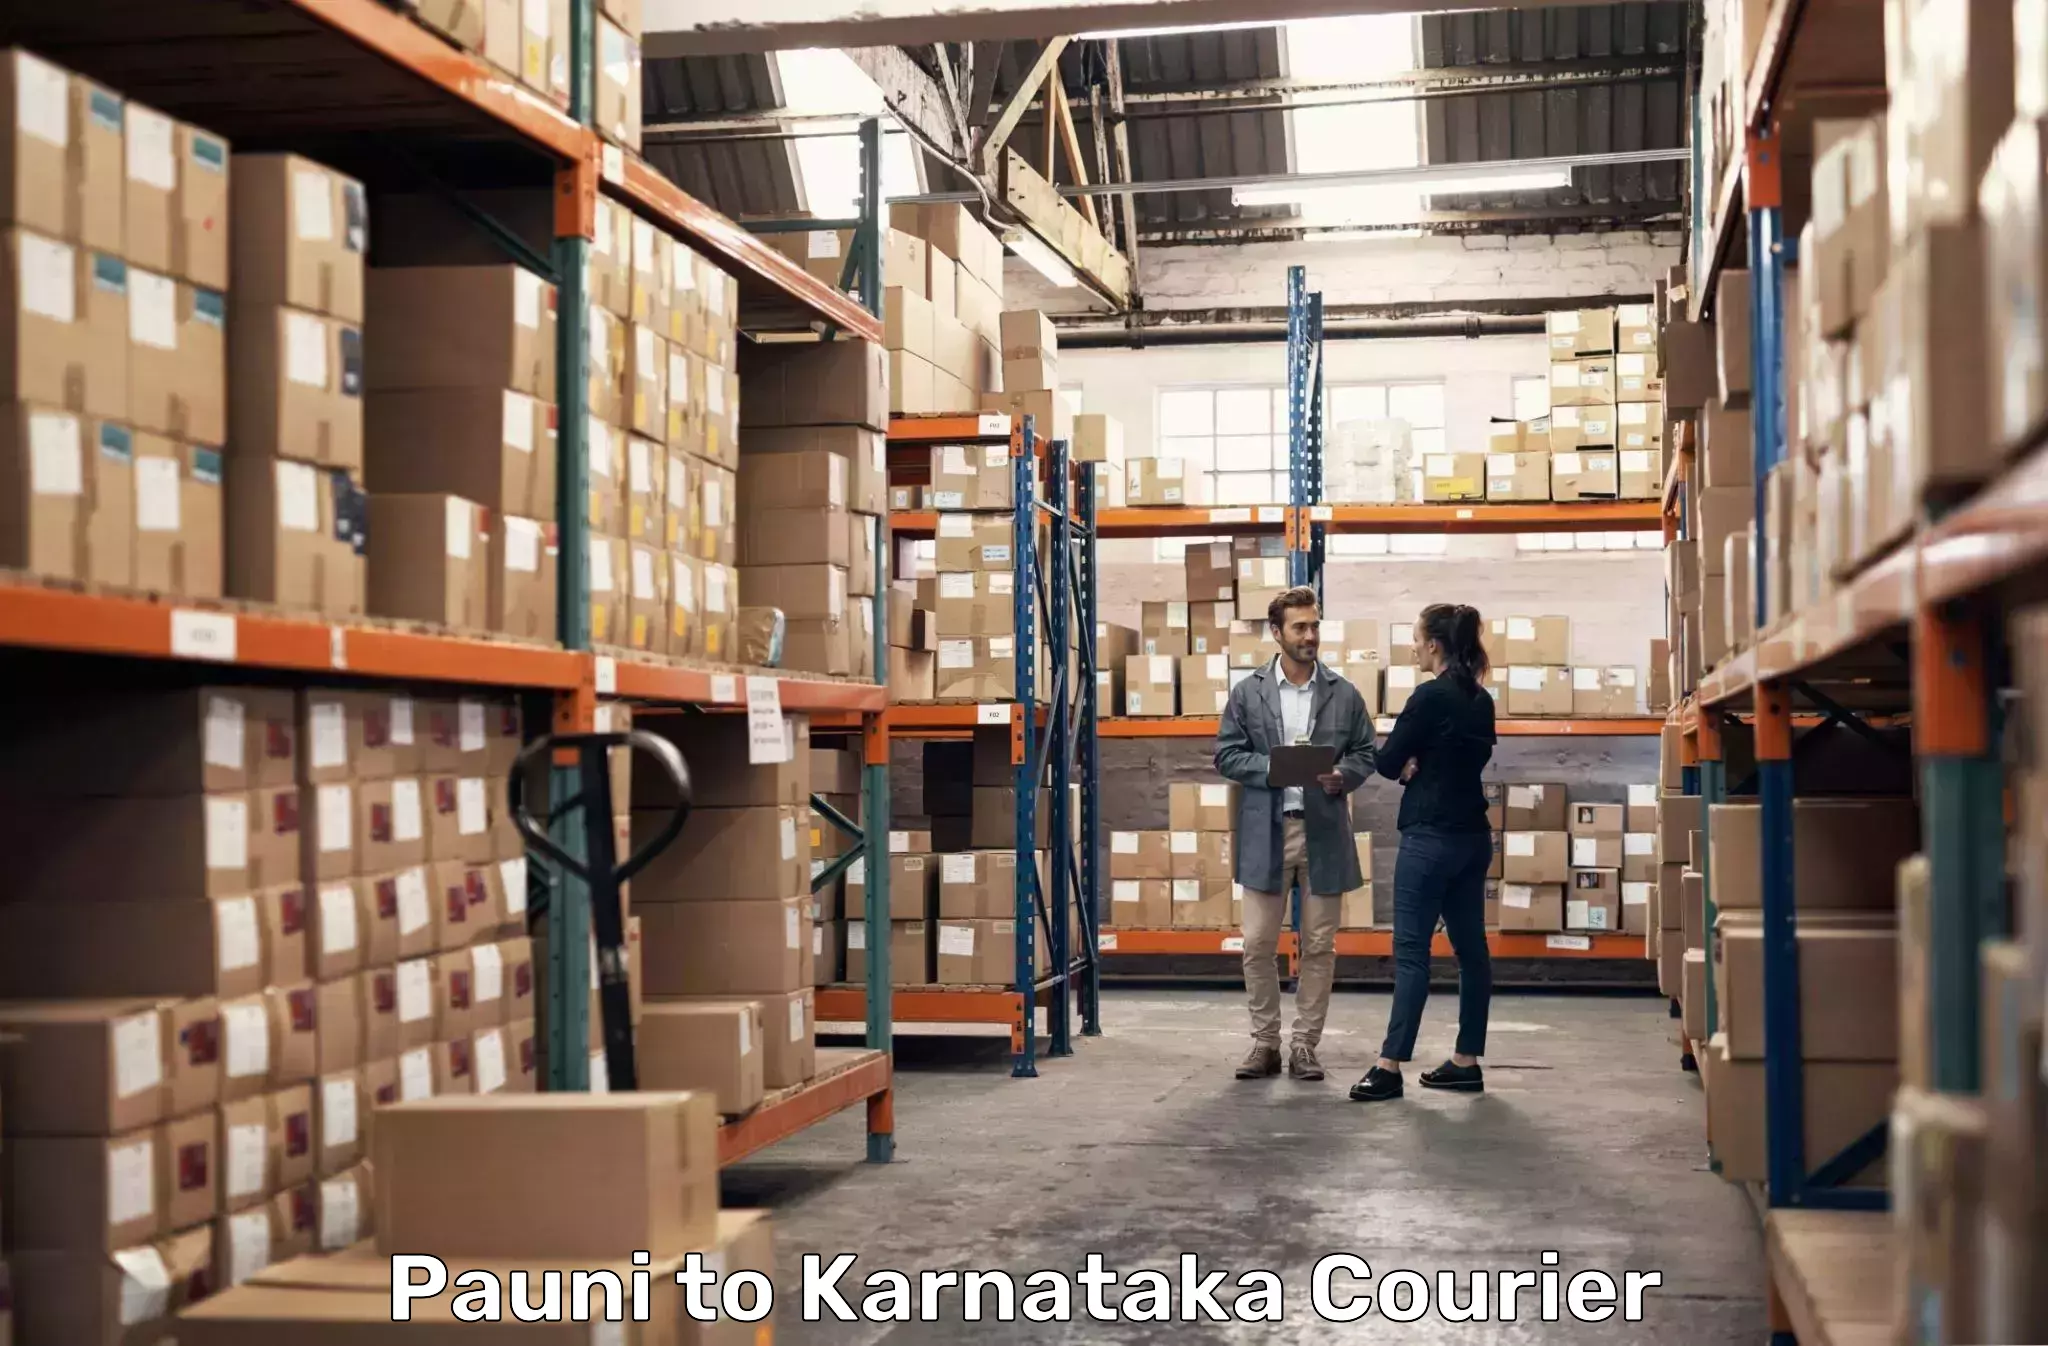 Express delivery capabilities in Pauni to Kundapura